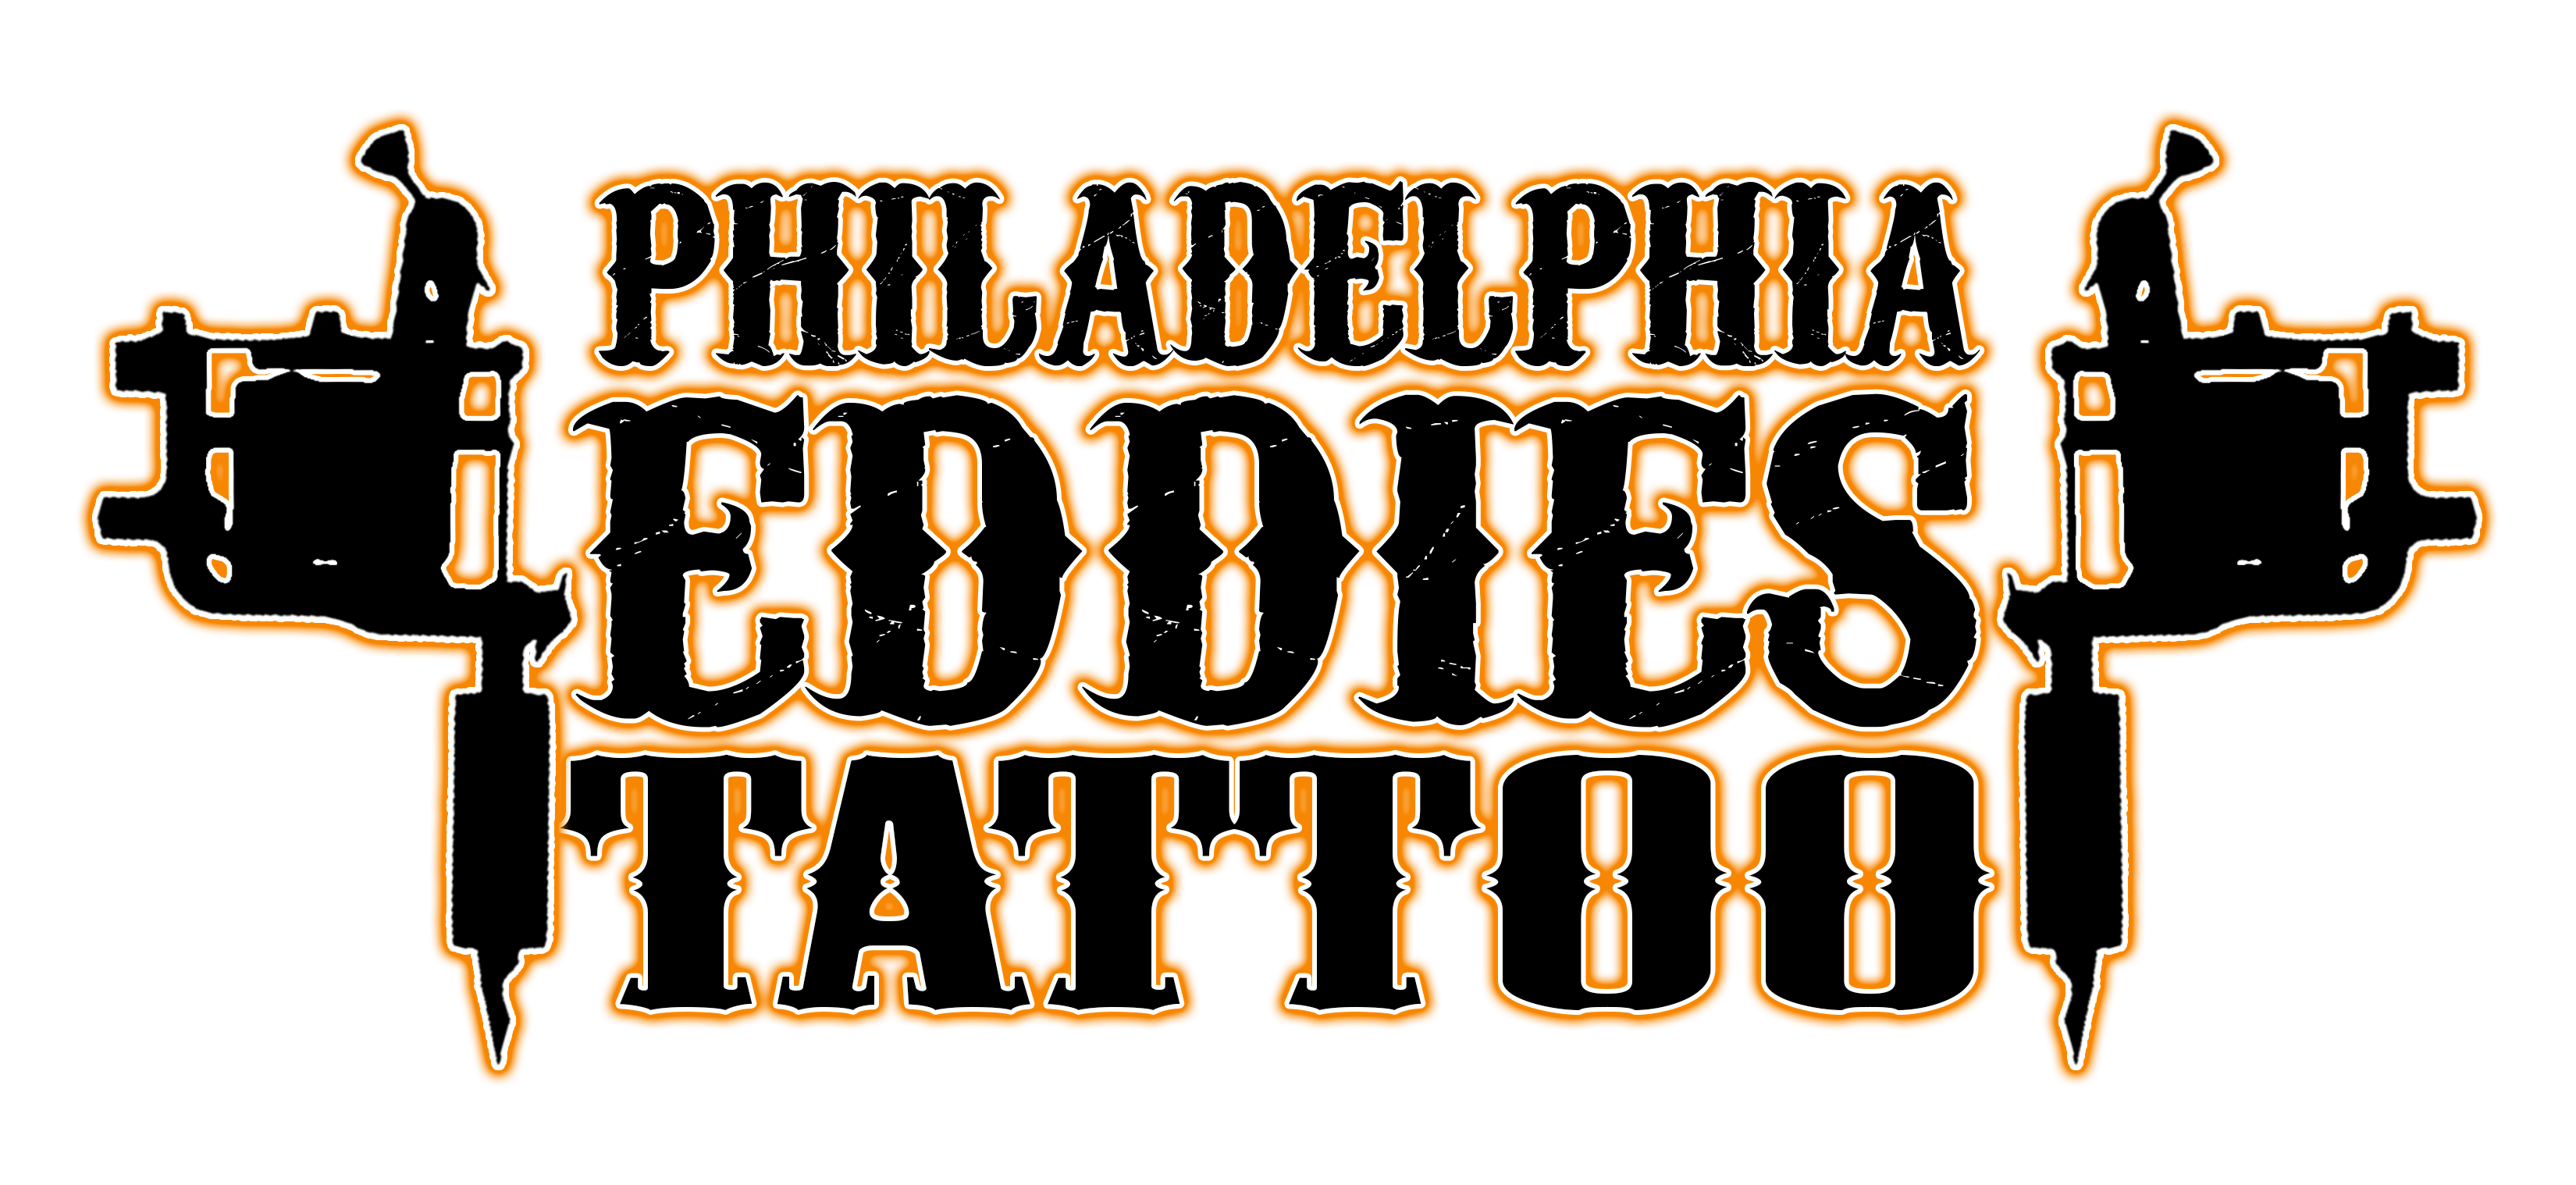 Philadelphia Eddie  Tattoo Collection